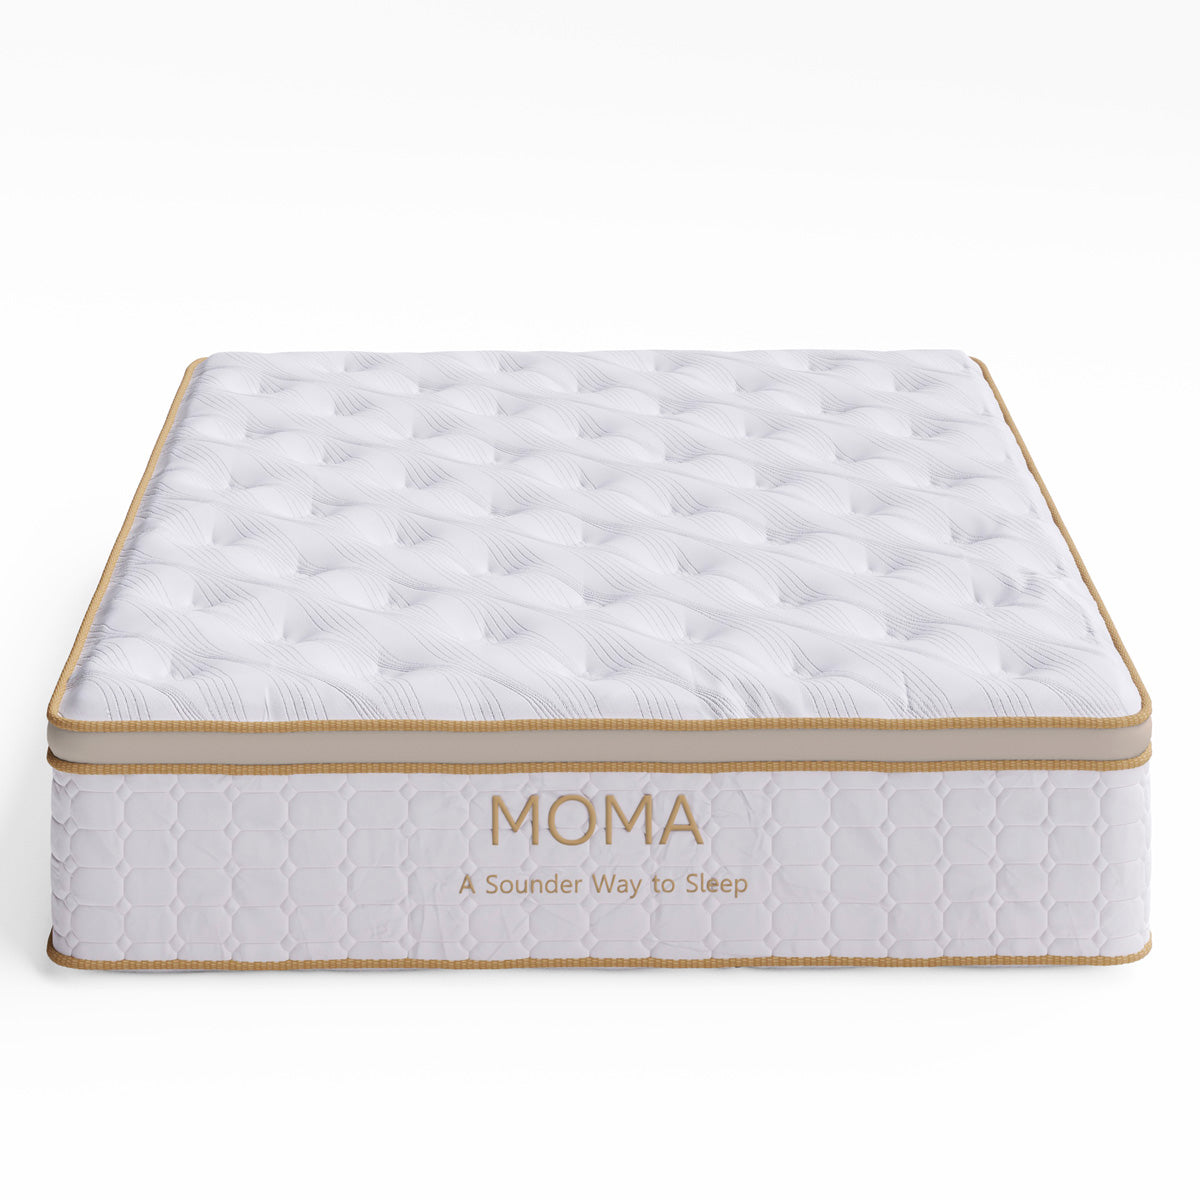 Moma Comfort Hybrid Mattress (King Size)